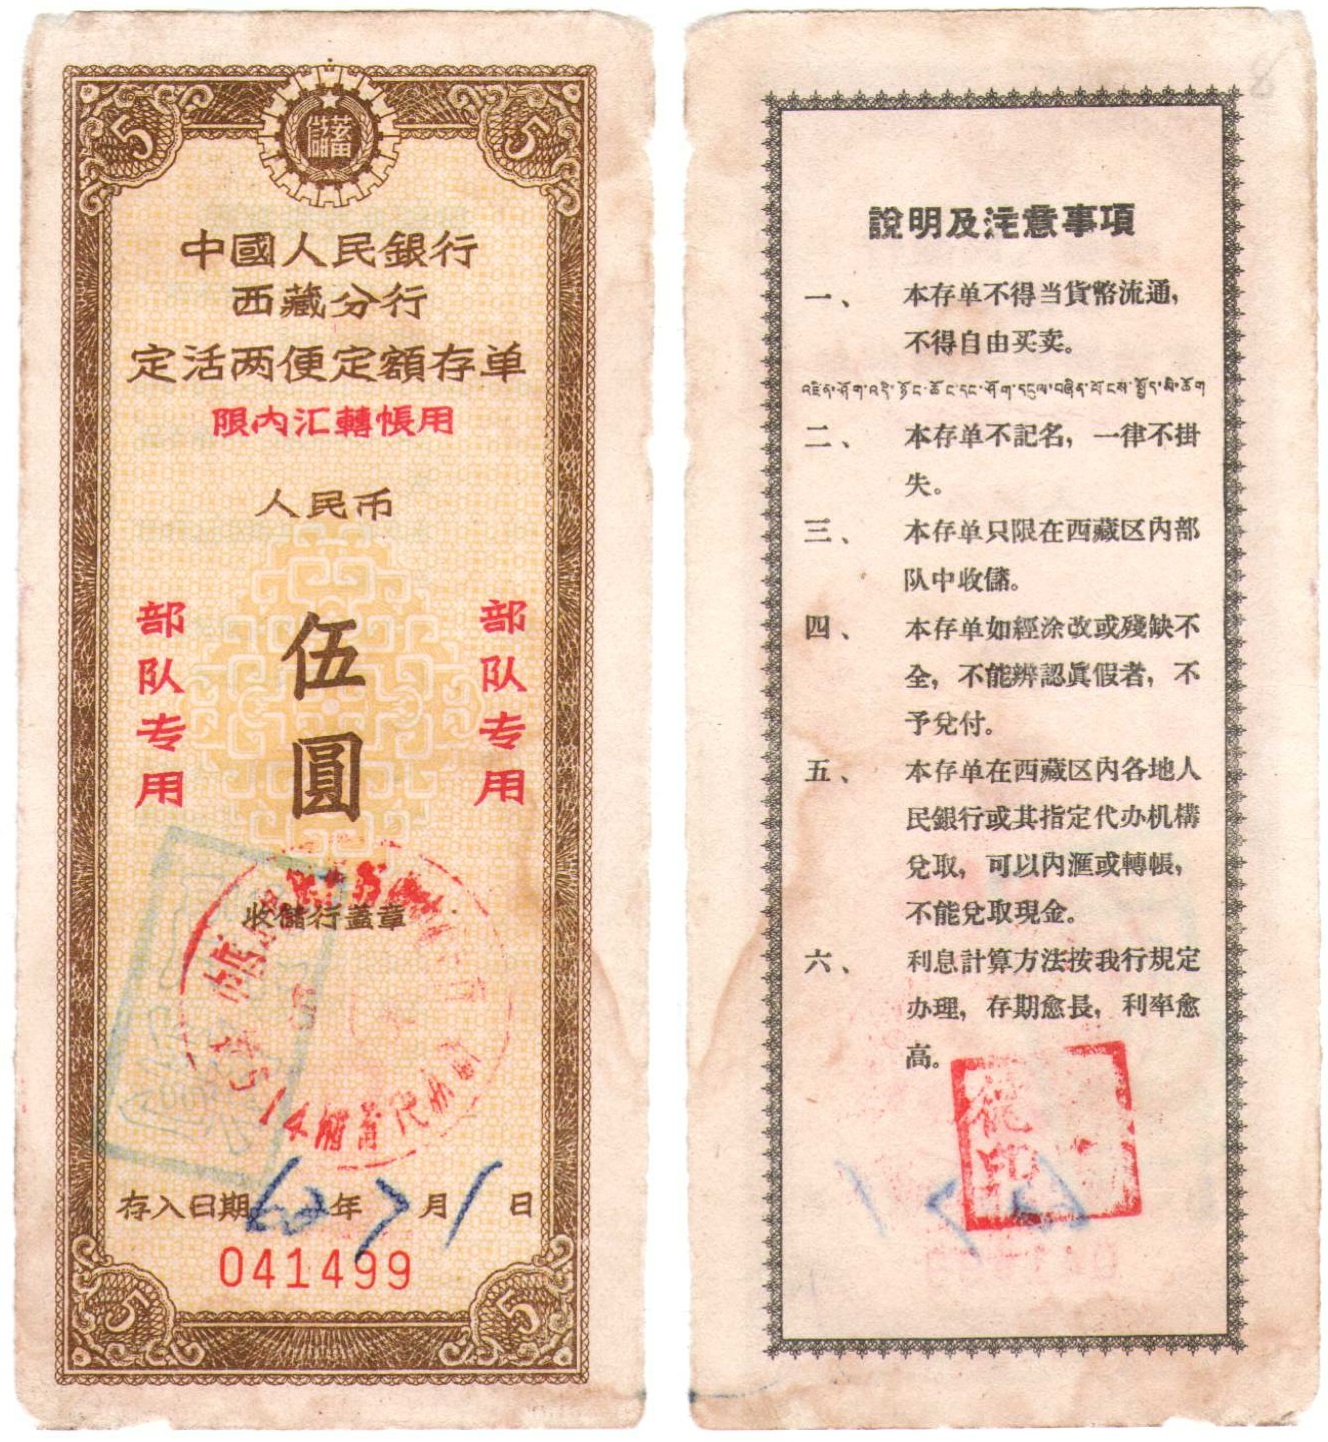 D3204, Scarce Tibet Deposit Receipt, 5 Silver Dollars, 1962 Tibetan